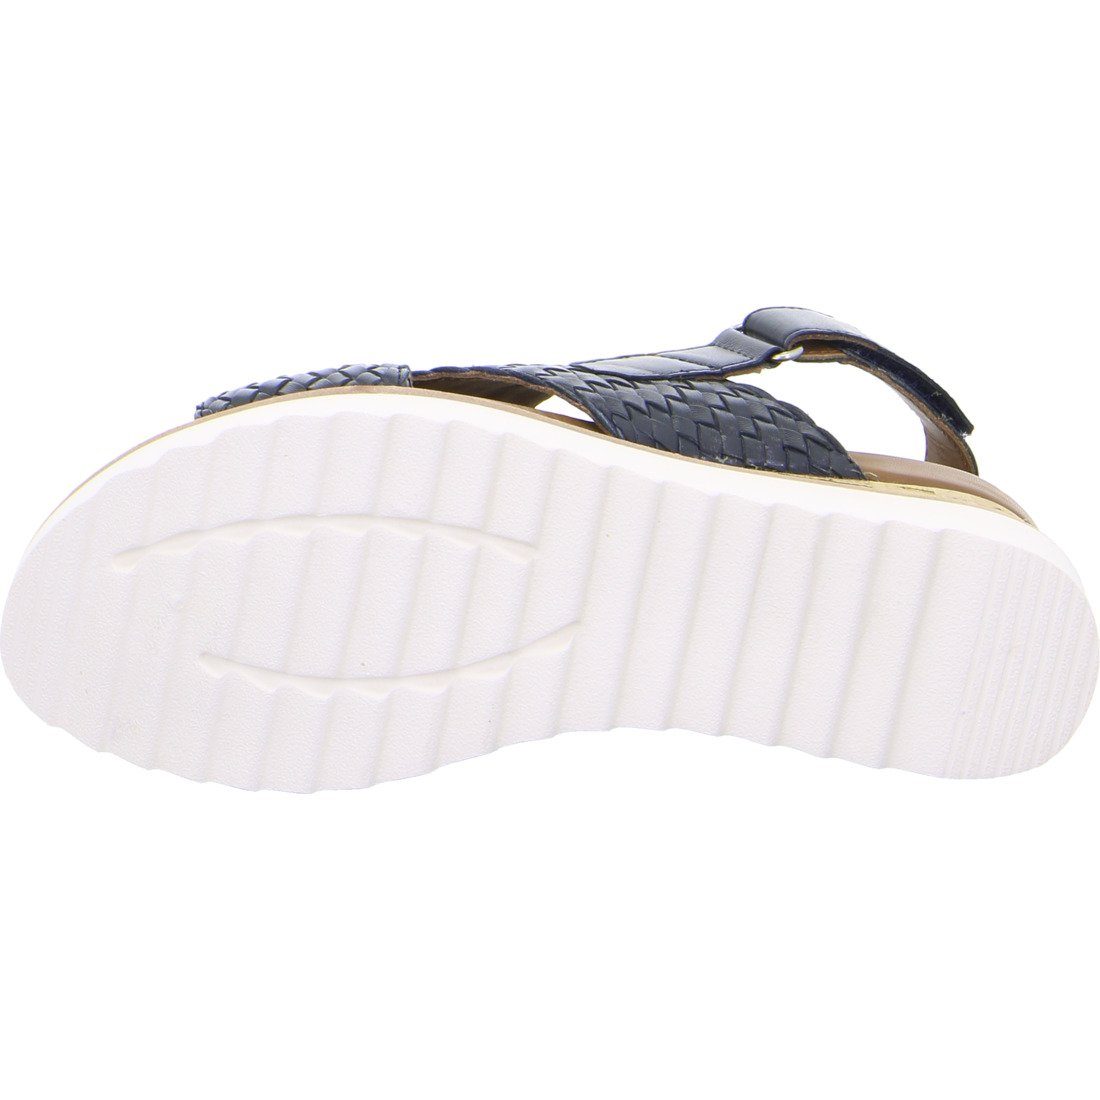 Ara Ara Schuhe, Sandalette Damen 048035 Sandalette Valencia - blau Leder